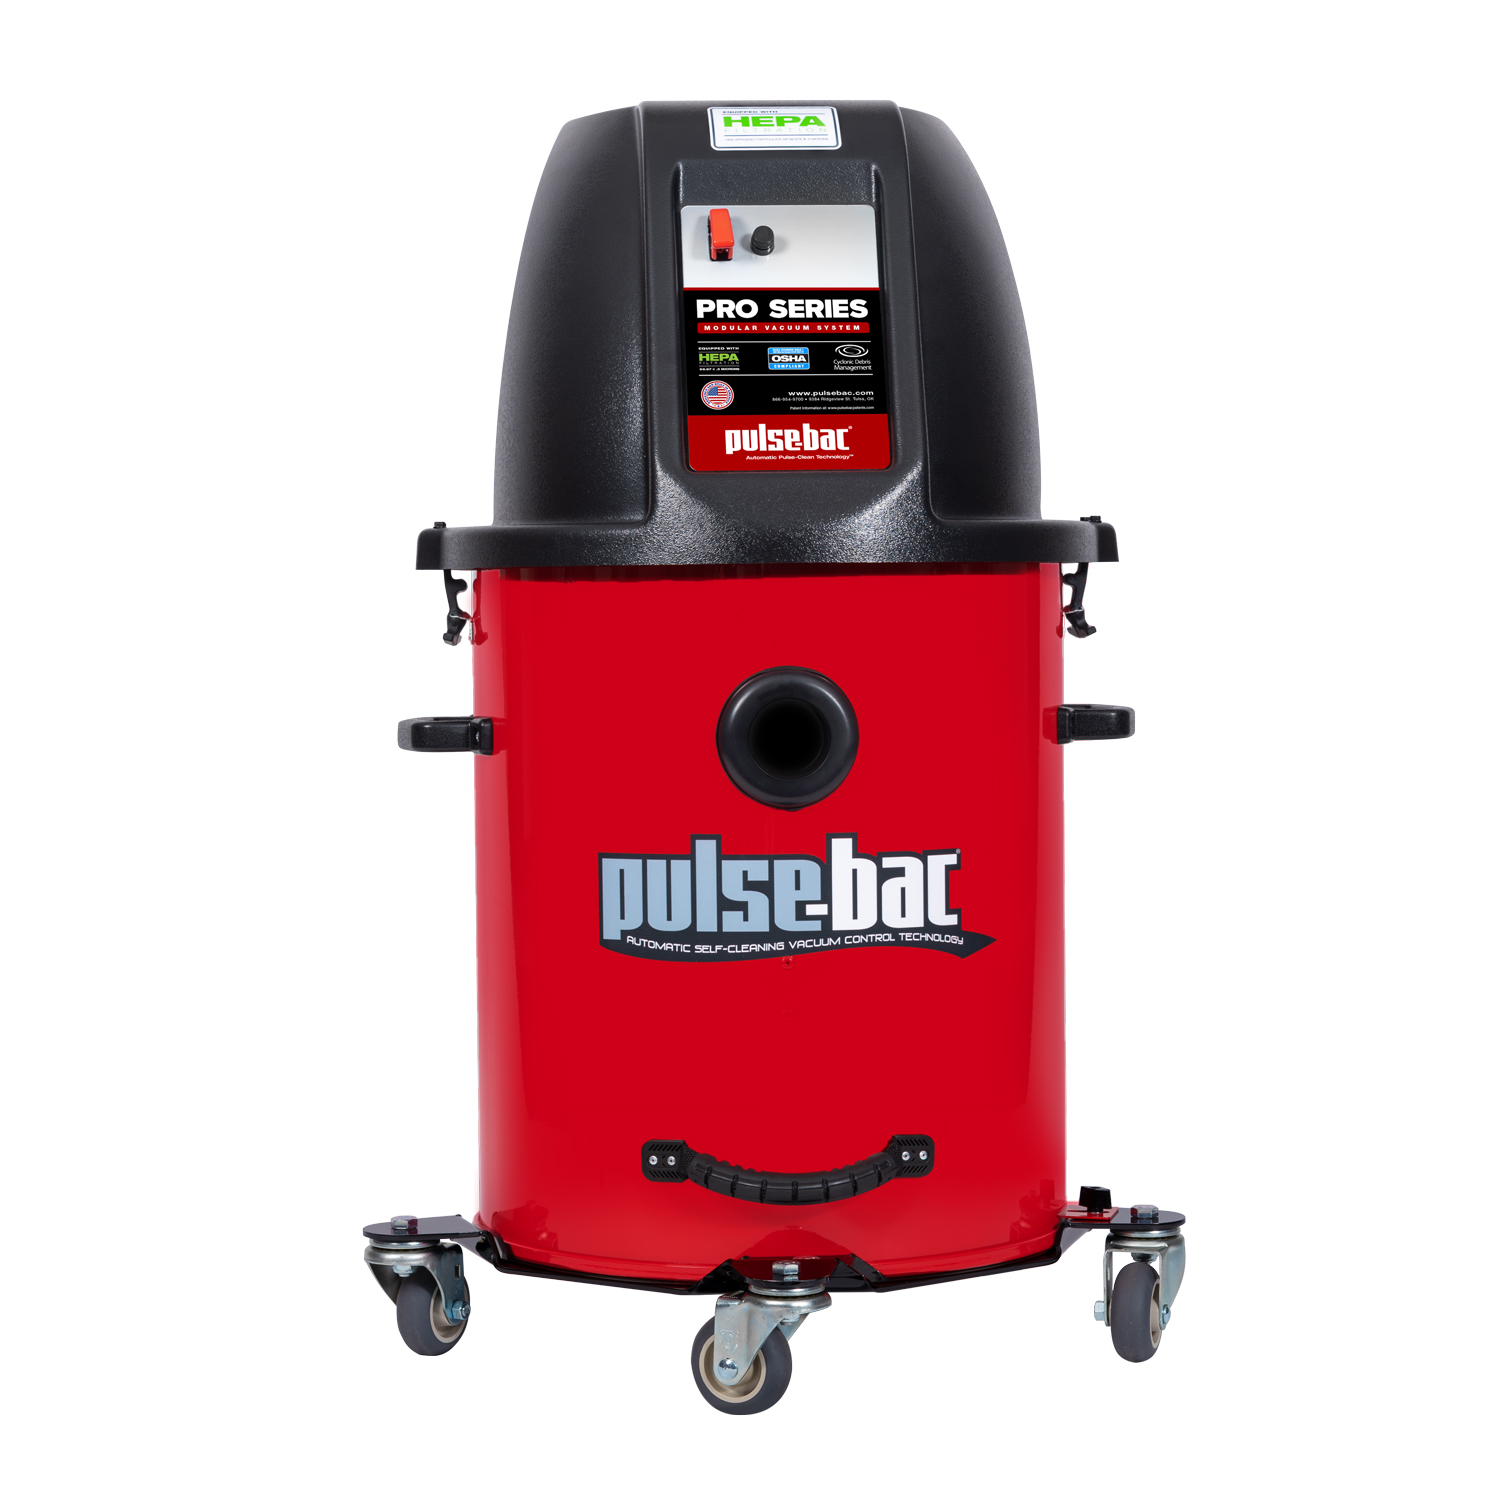 Pulse-Bac Pro 311 Commercial Vacuum